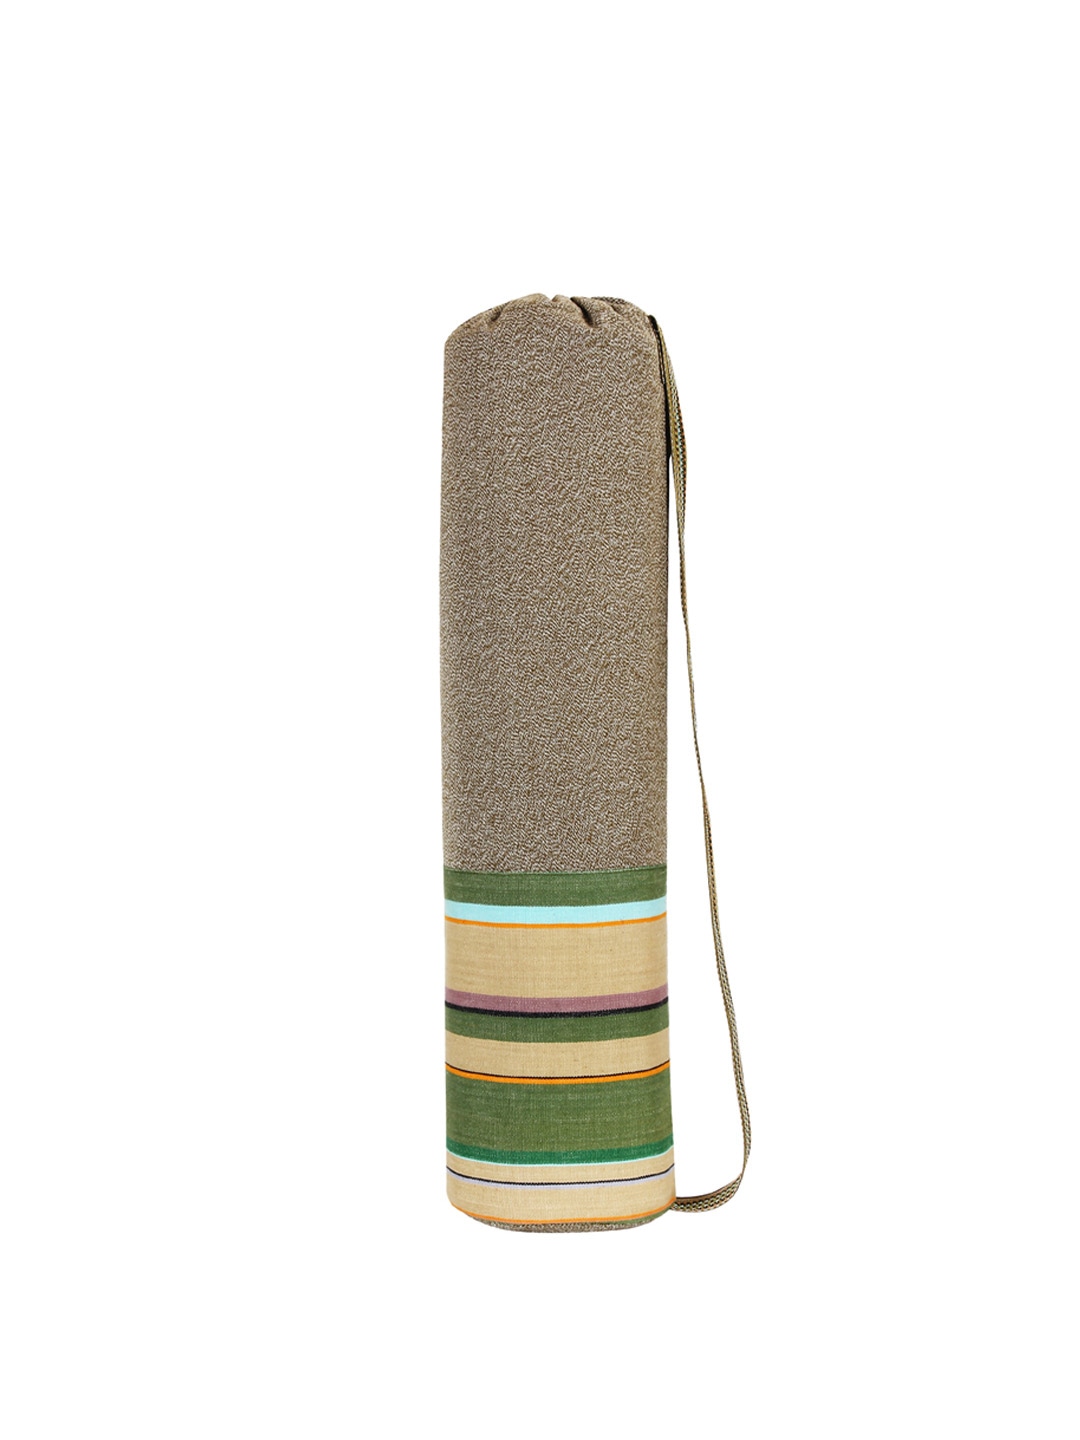 Accessories Duffel Bag | Anekaant Khaki Brown Canvas Yoga Mat Bag - LV65570